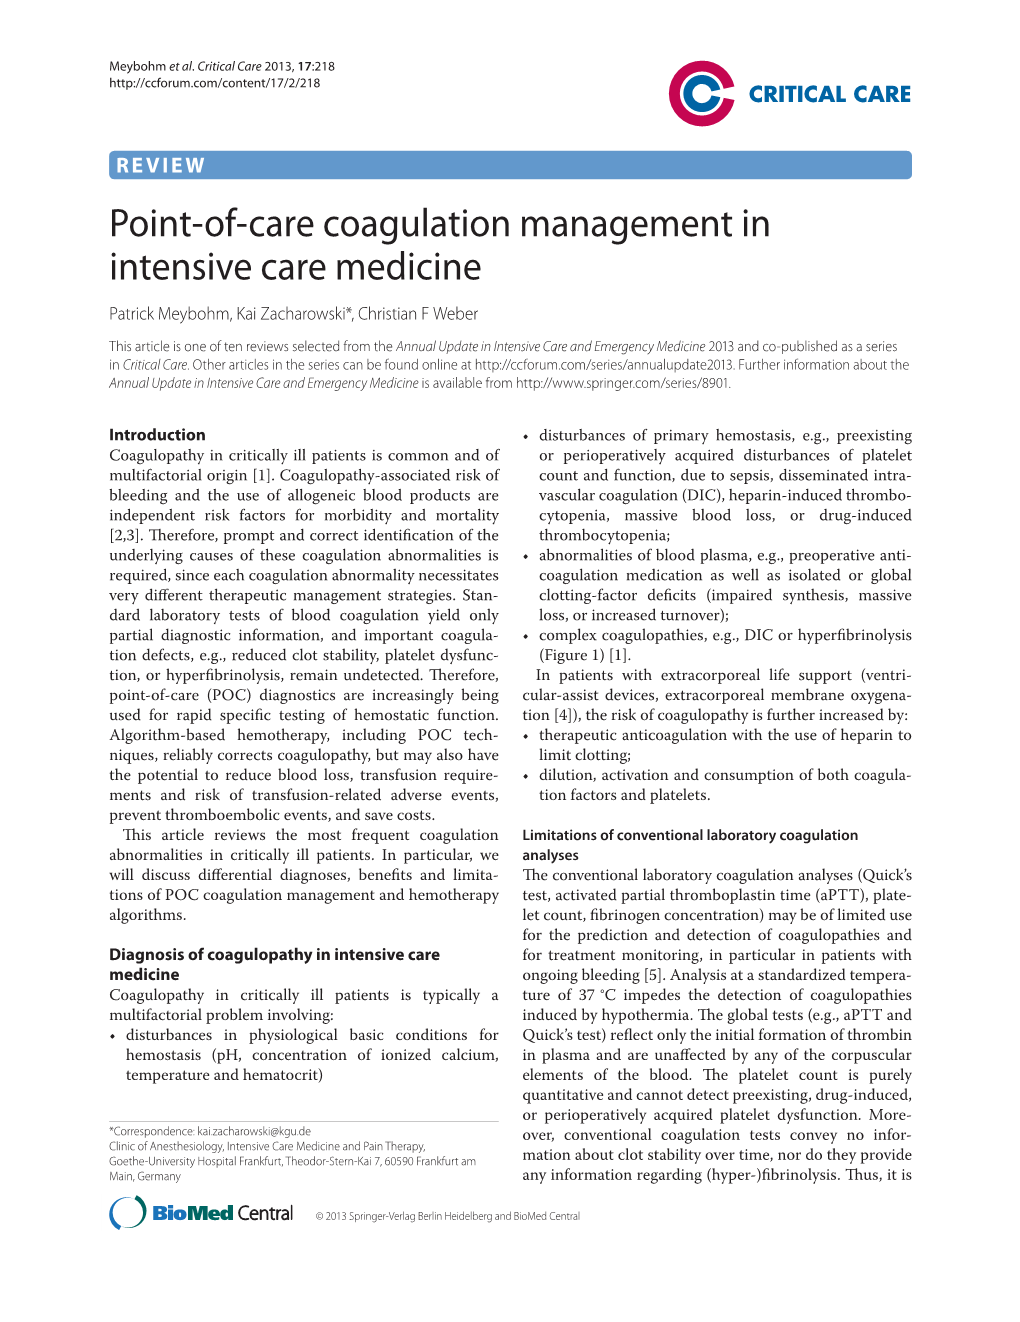 Point-Of-Care Coagulation Management in Intensive Care Medicine Patrick Meybohm, Kai Zacharowski*, Christian F Weber